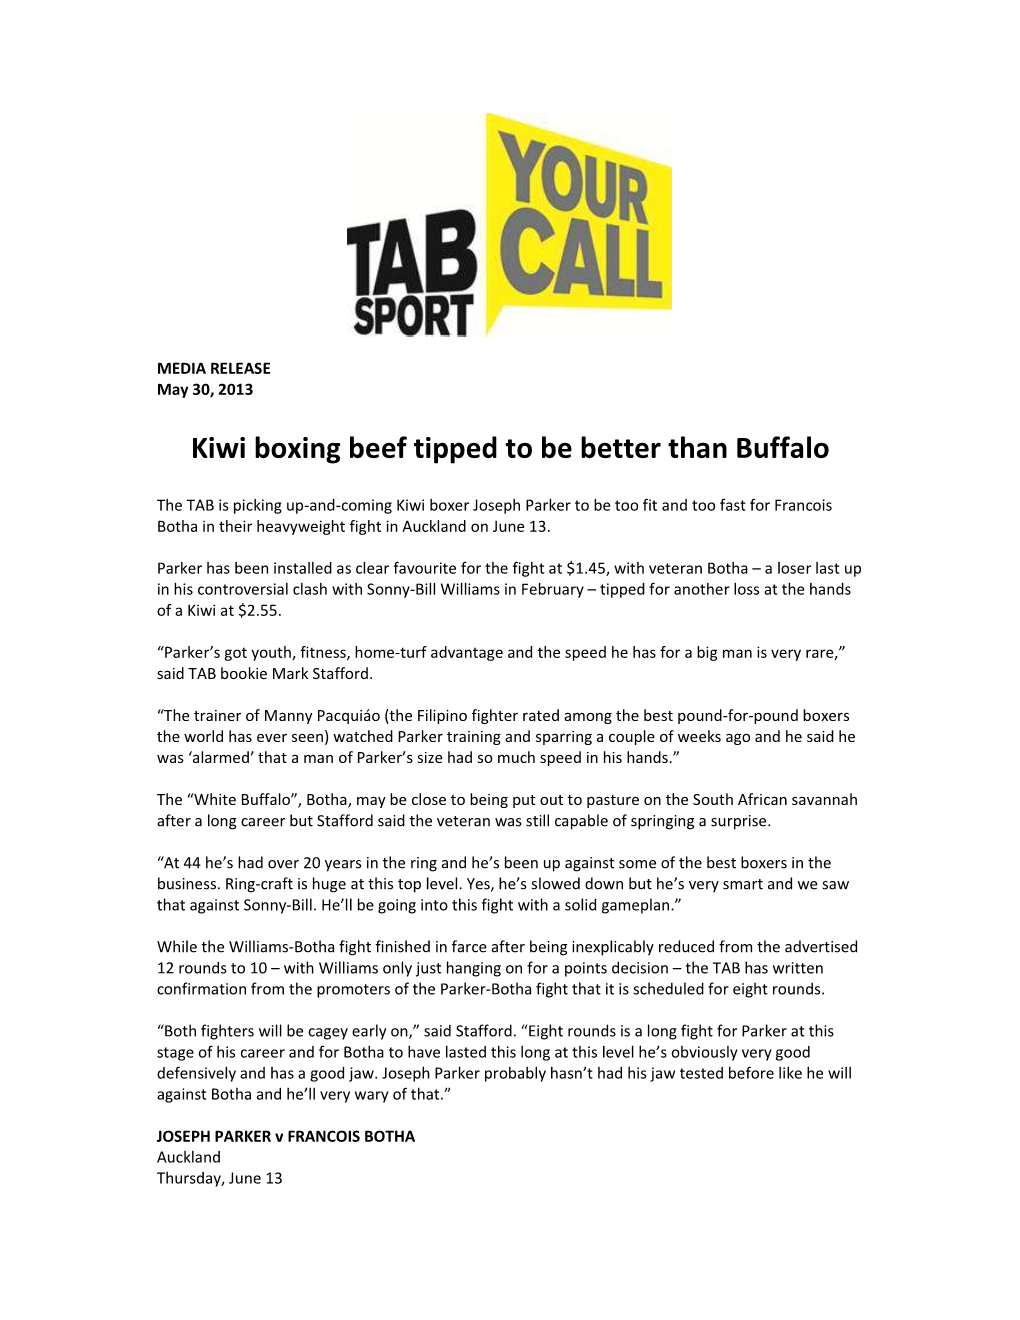 Kiwi Boxing Beef Tipped to Be Better Than Buffalo